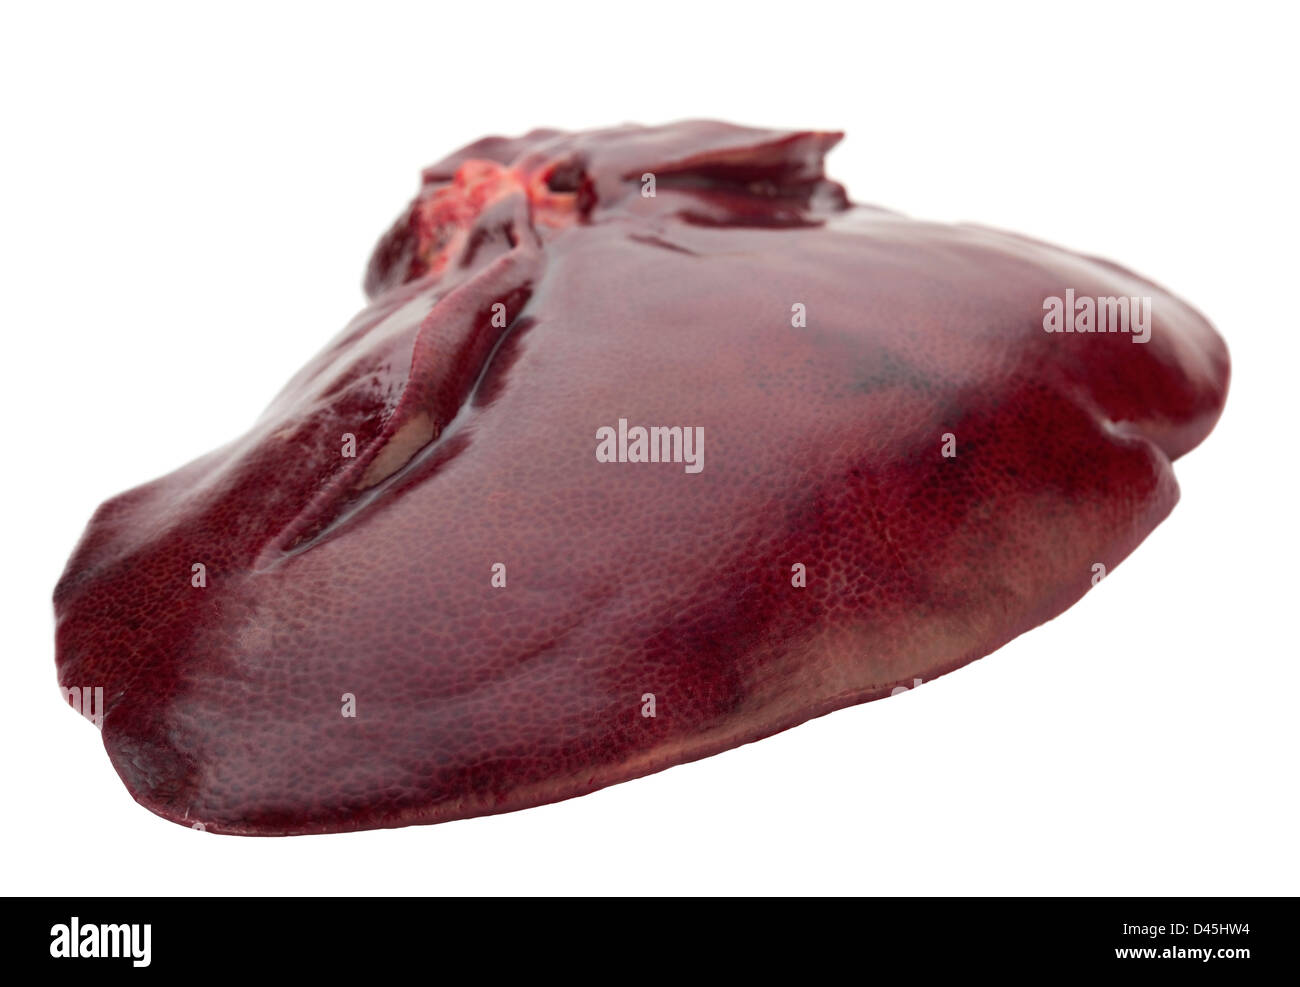 Raw pork liver isolated on white Stock Photo